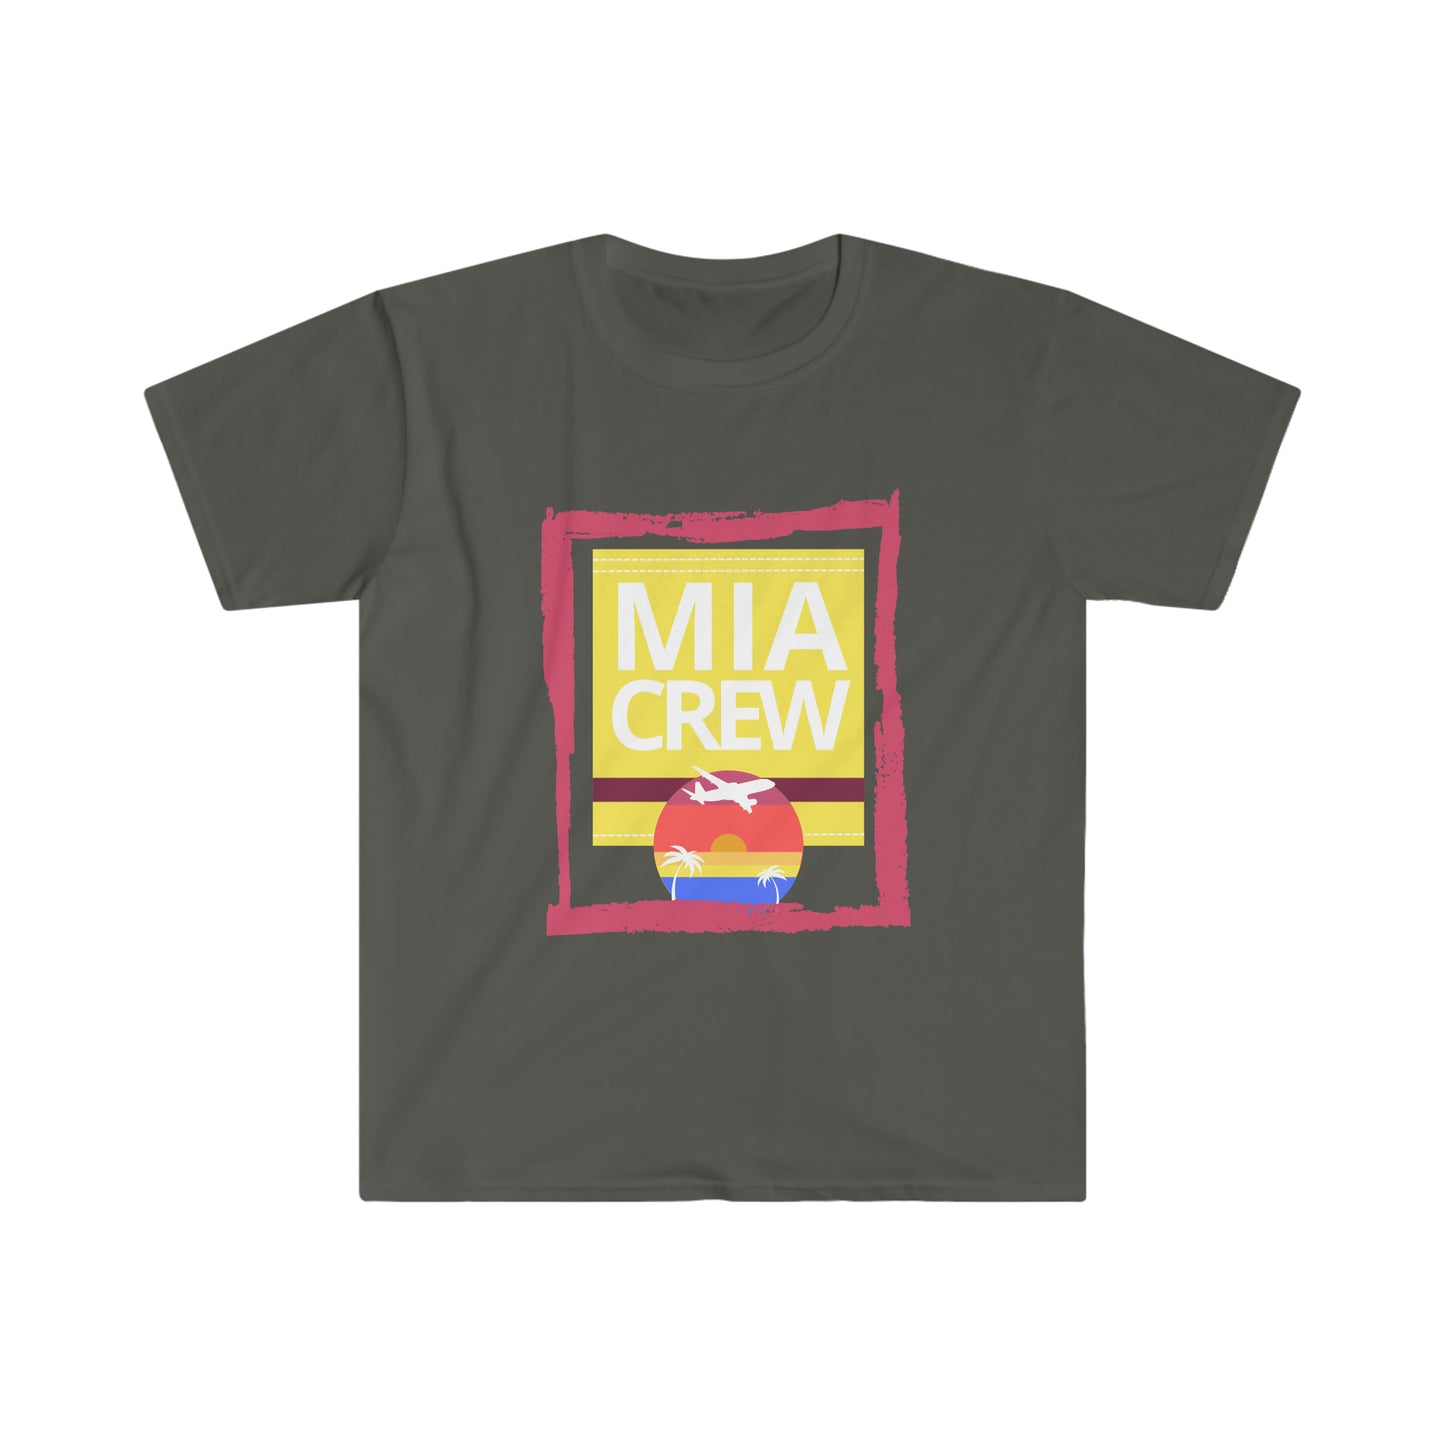 MIA Airport Crew T-shirt for Miami International Airport